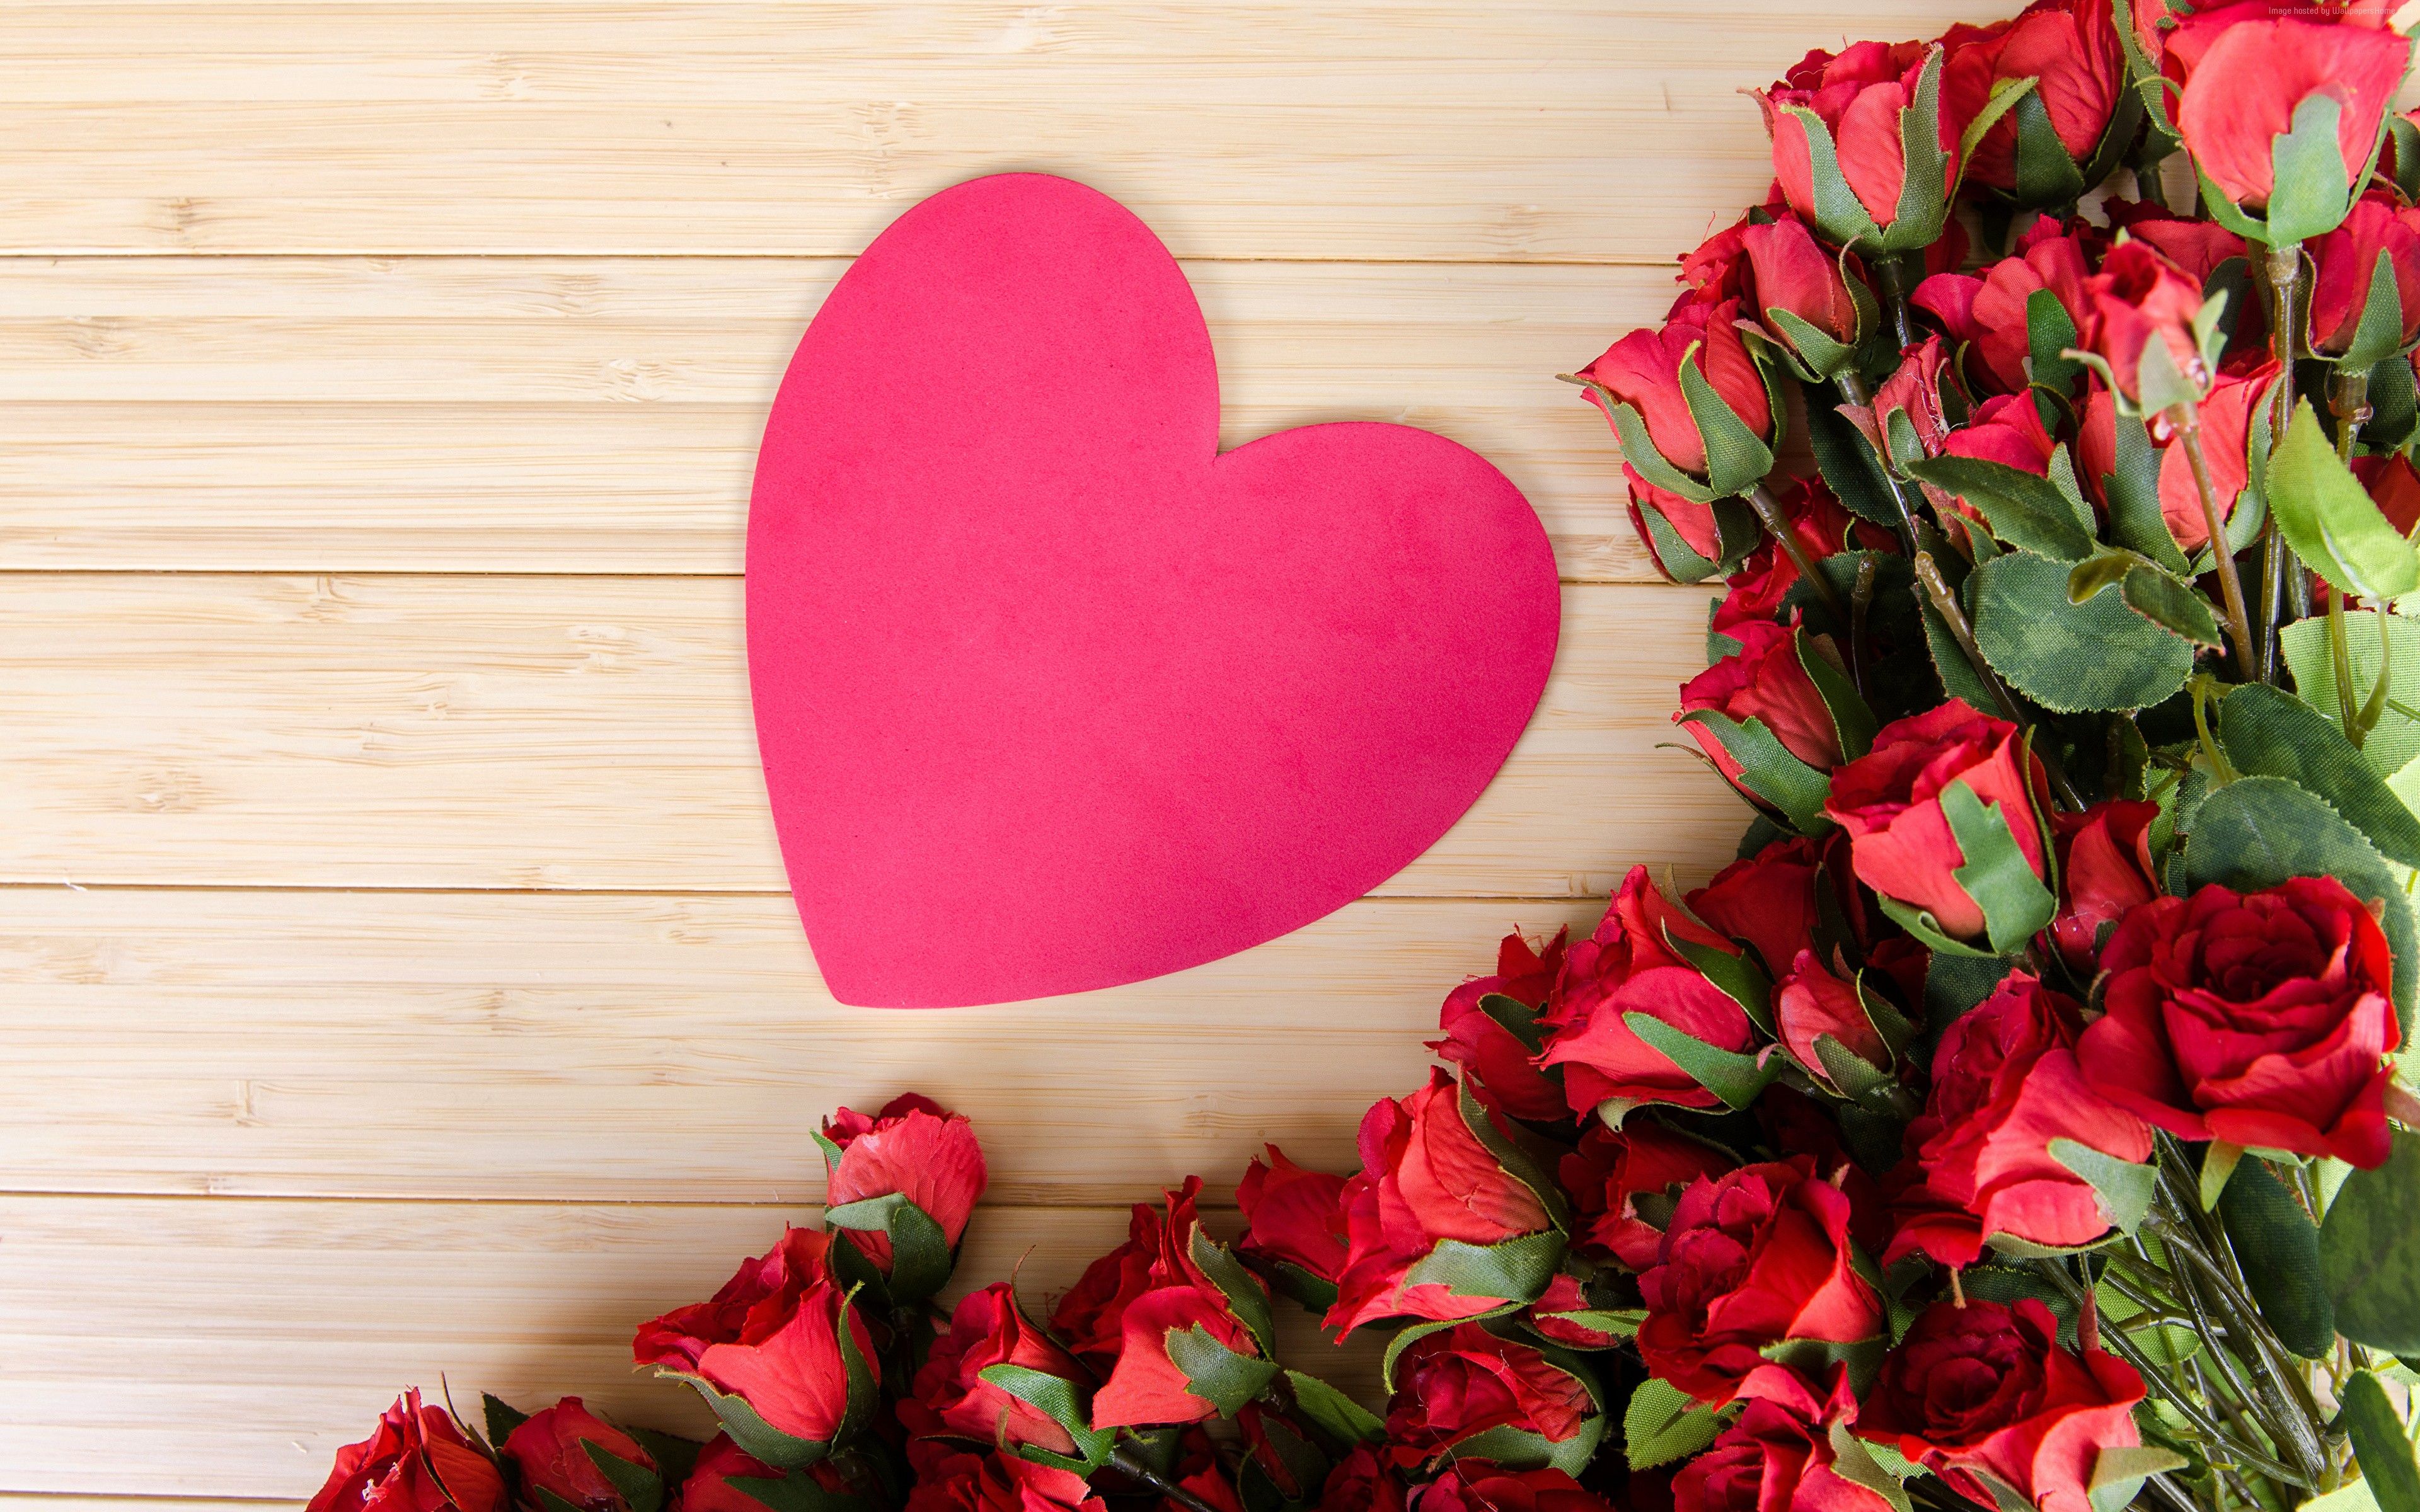 Stock Image love image, heart, rose, flowers, 4k, Stock Image